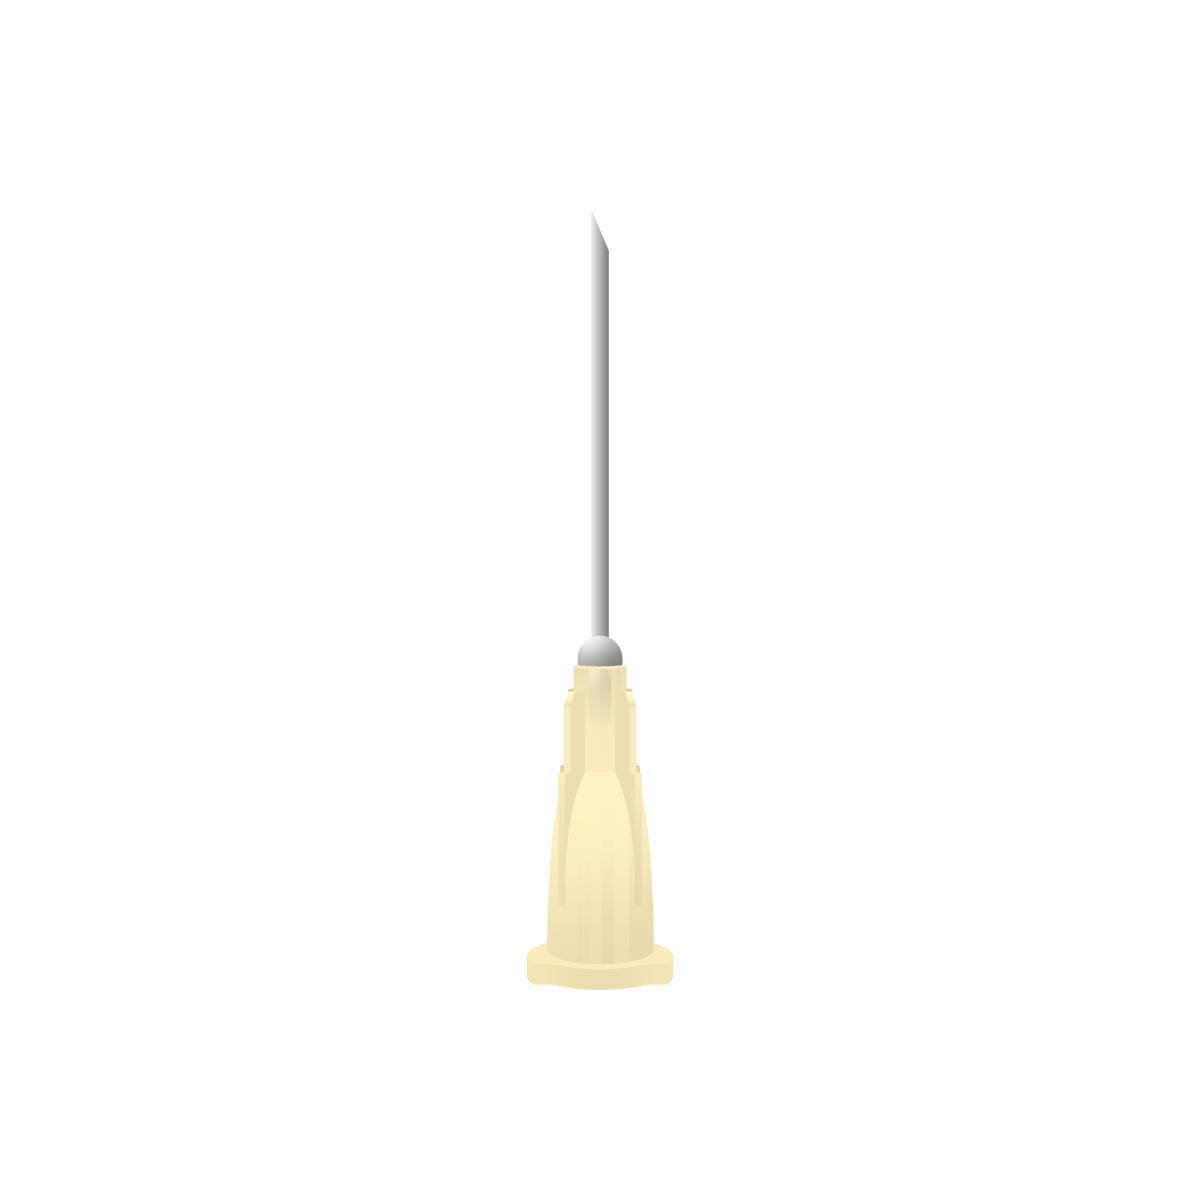 20g 1 inch Agriject Disposable Needles Poly Hub - UKMEDI